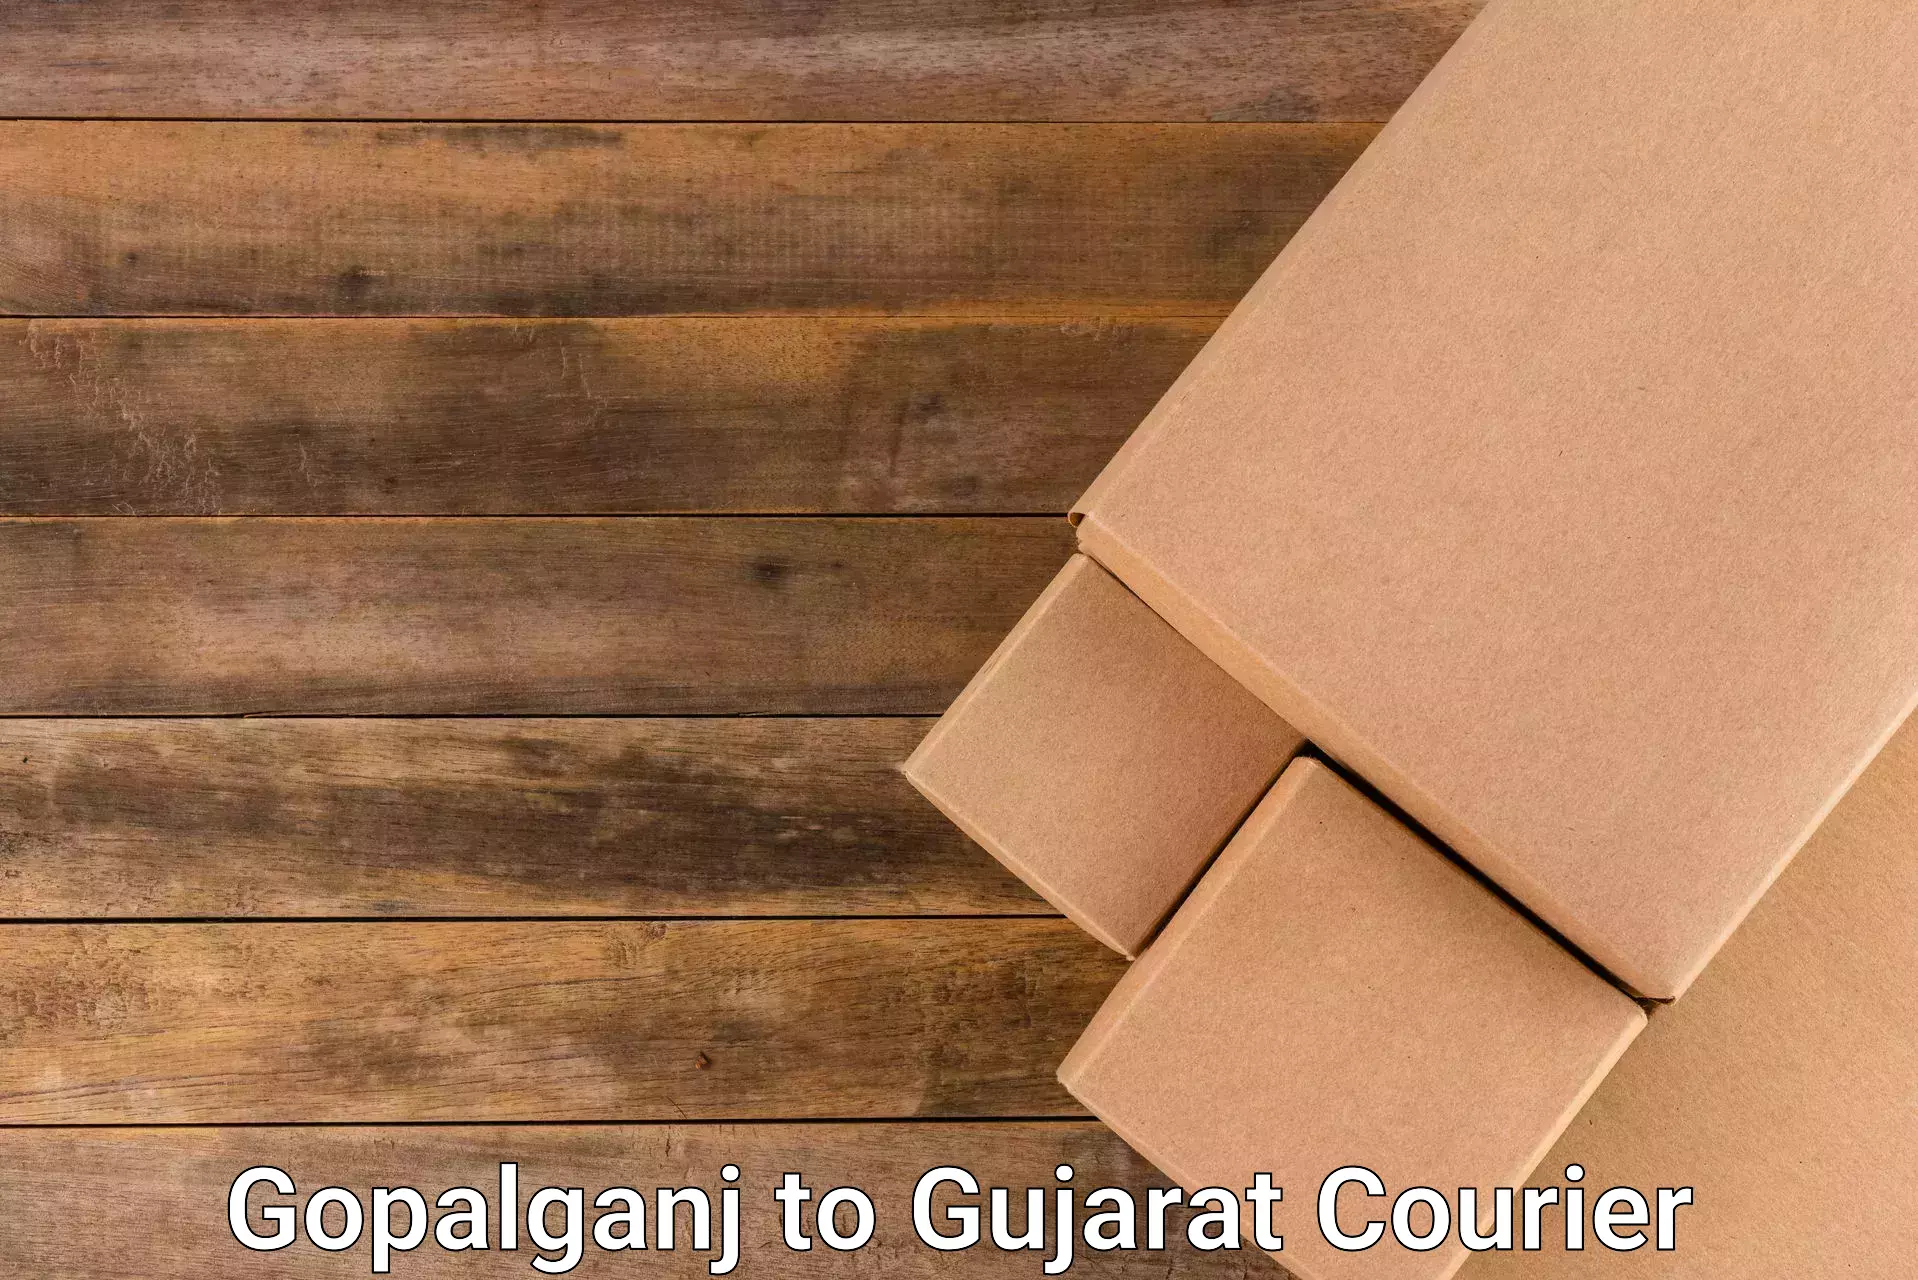 Advanced shipping network Gopalganj to Anand